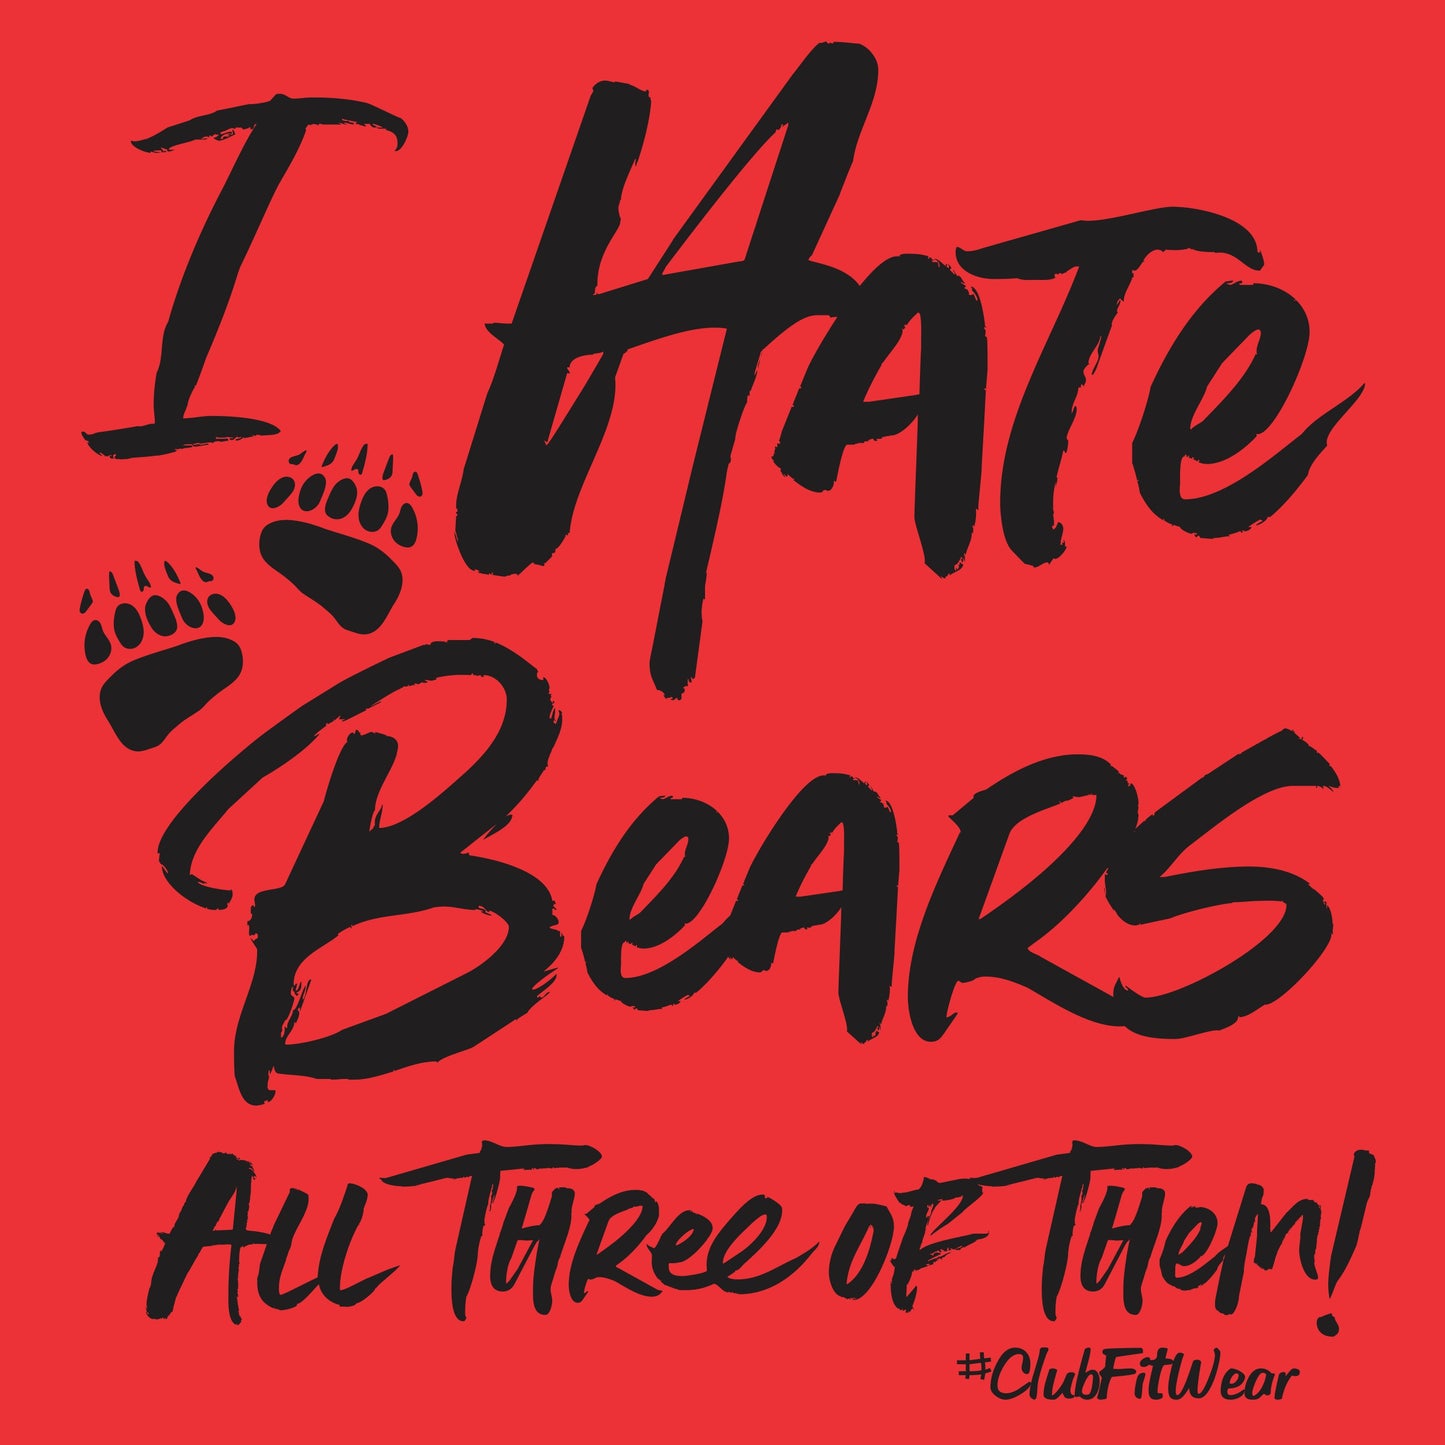 I Hate Bears All Three of Them